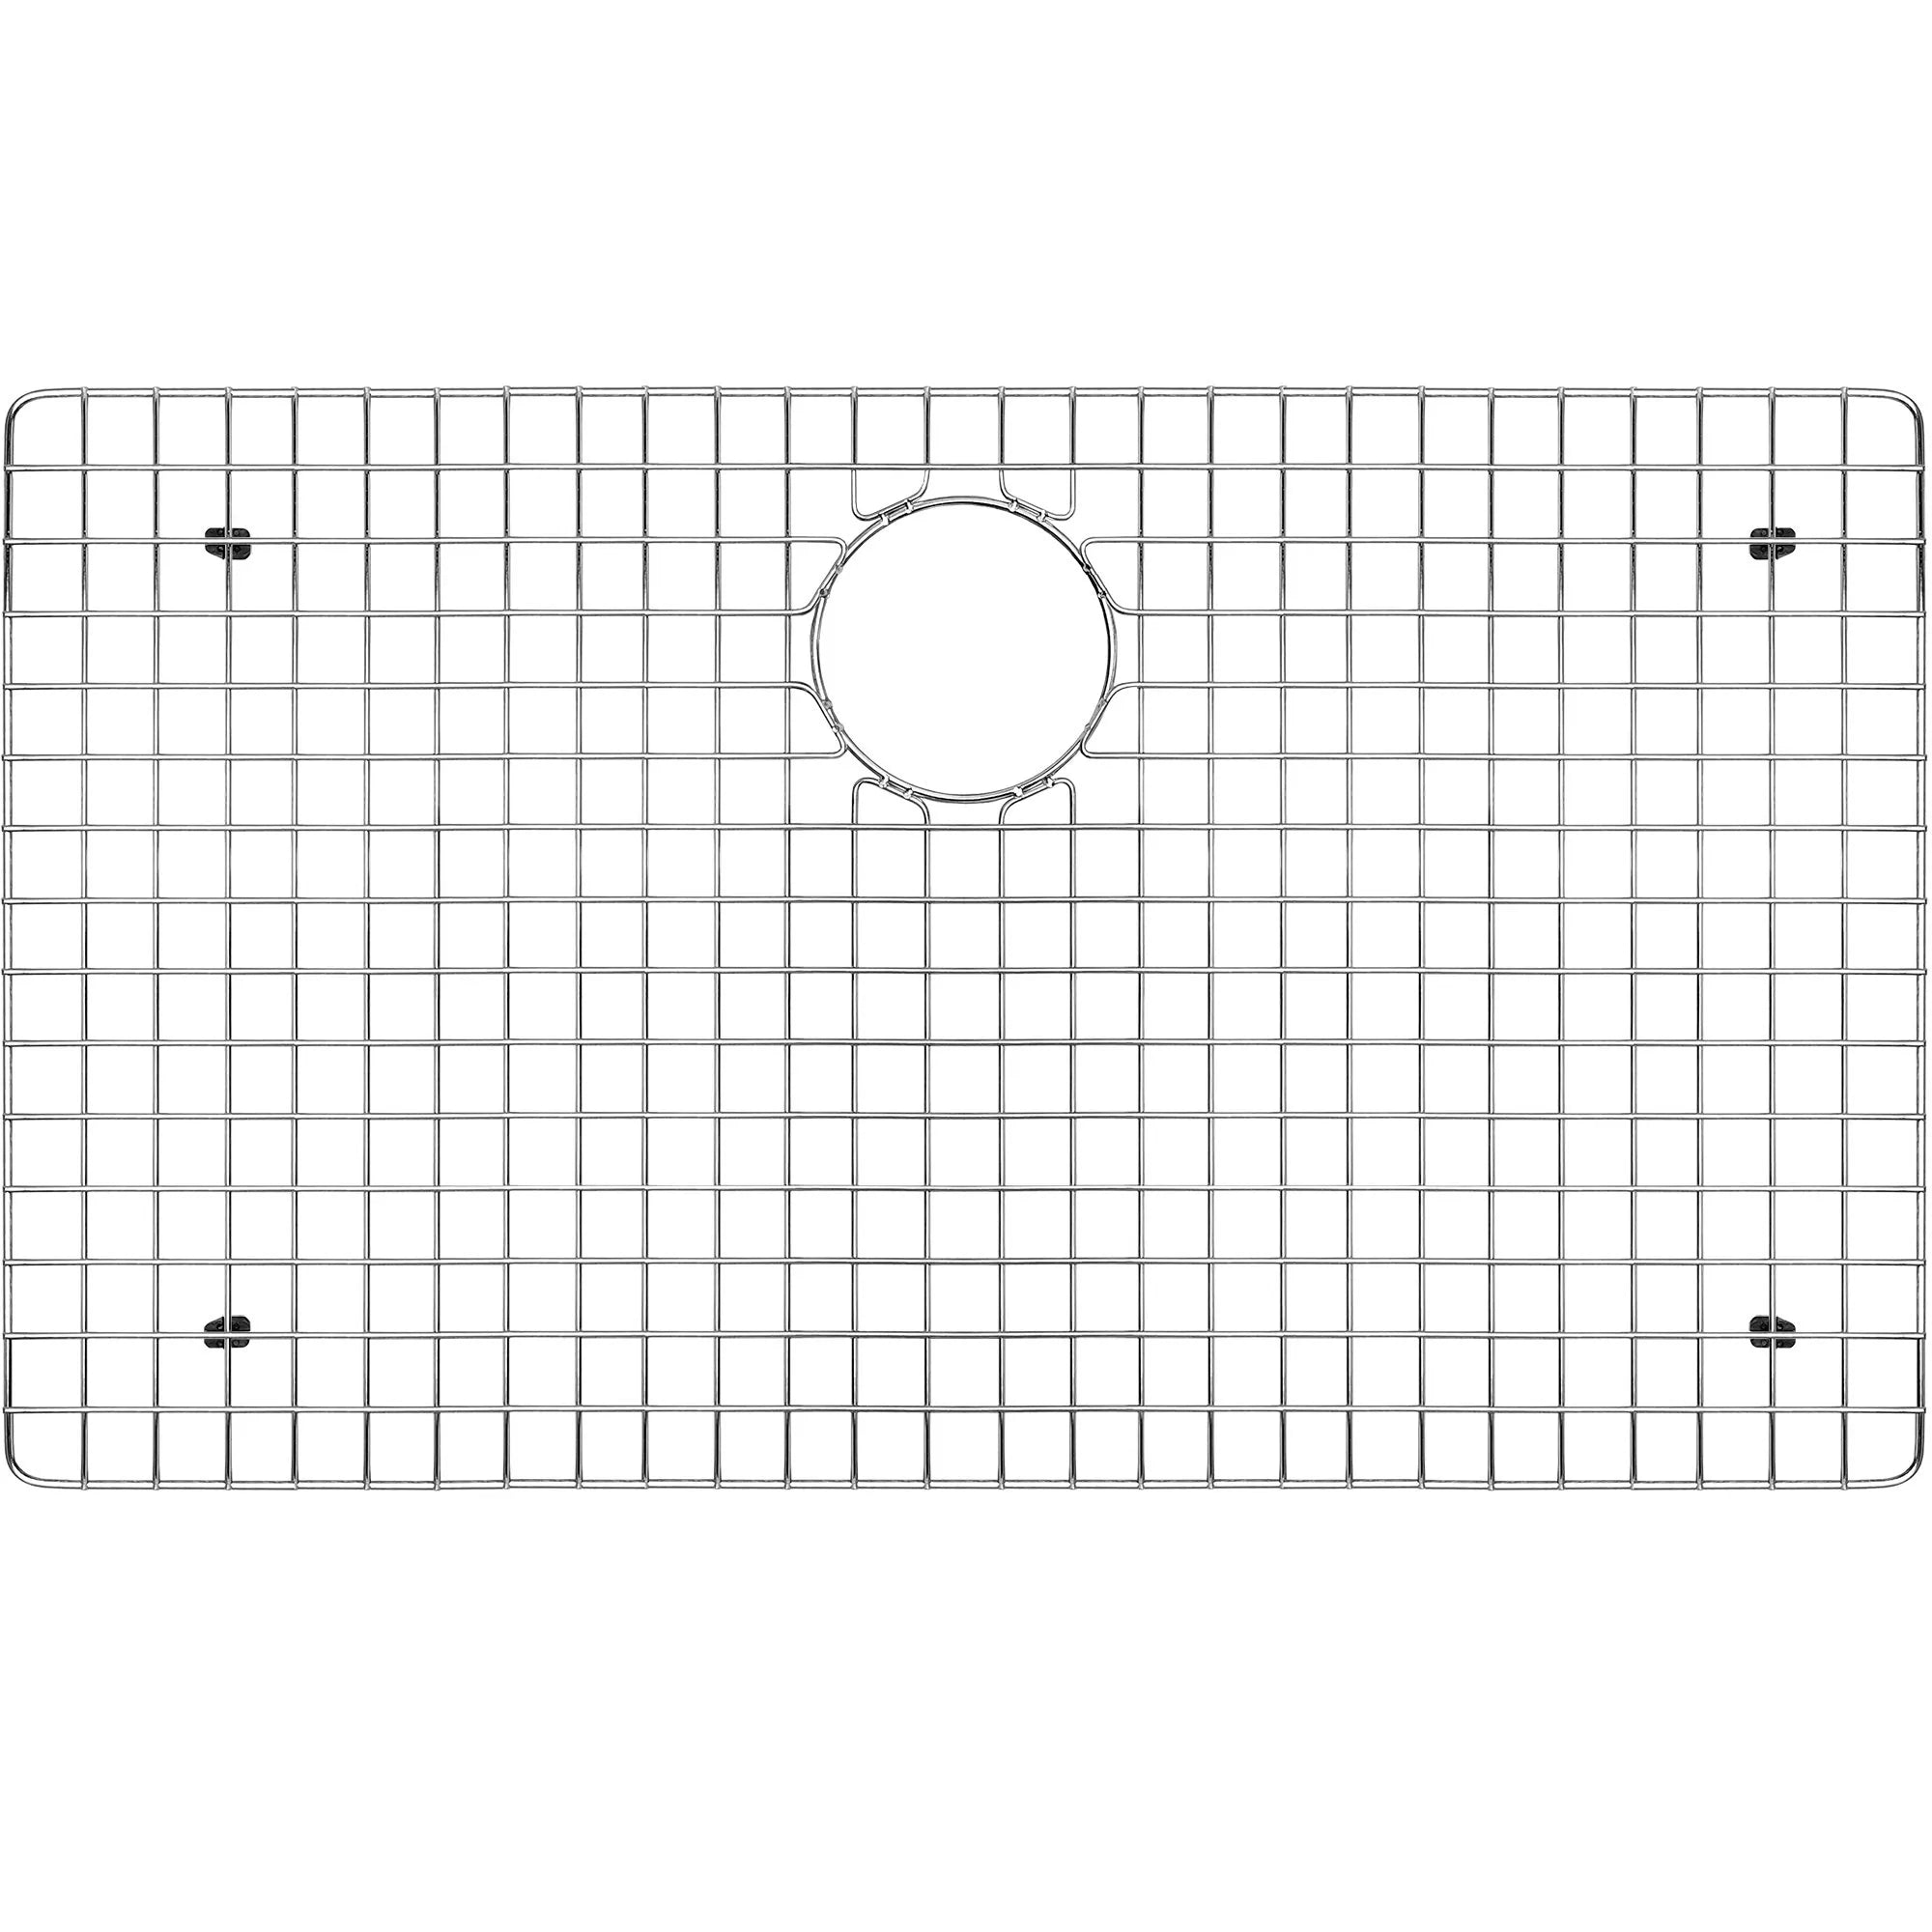 WHITEHAUS Stainless Steel Kitchen Sink Grid for Noah’s Sink Model WHNCM3219 - WHNCM3219G